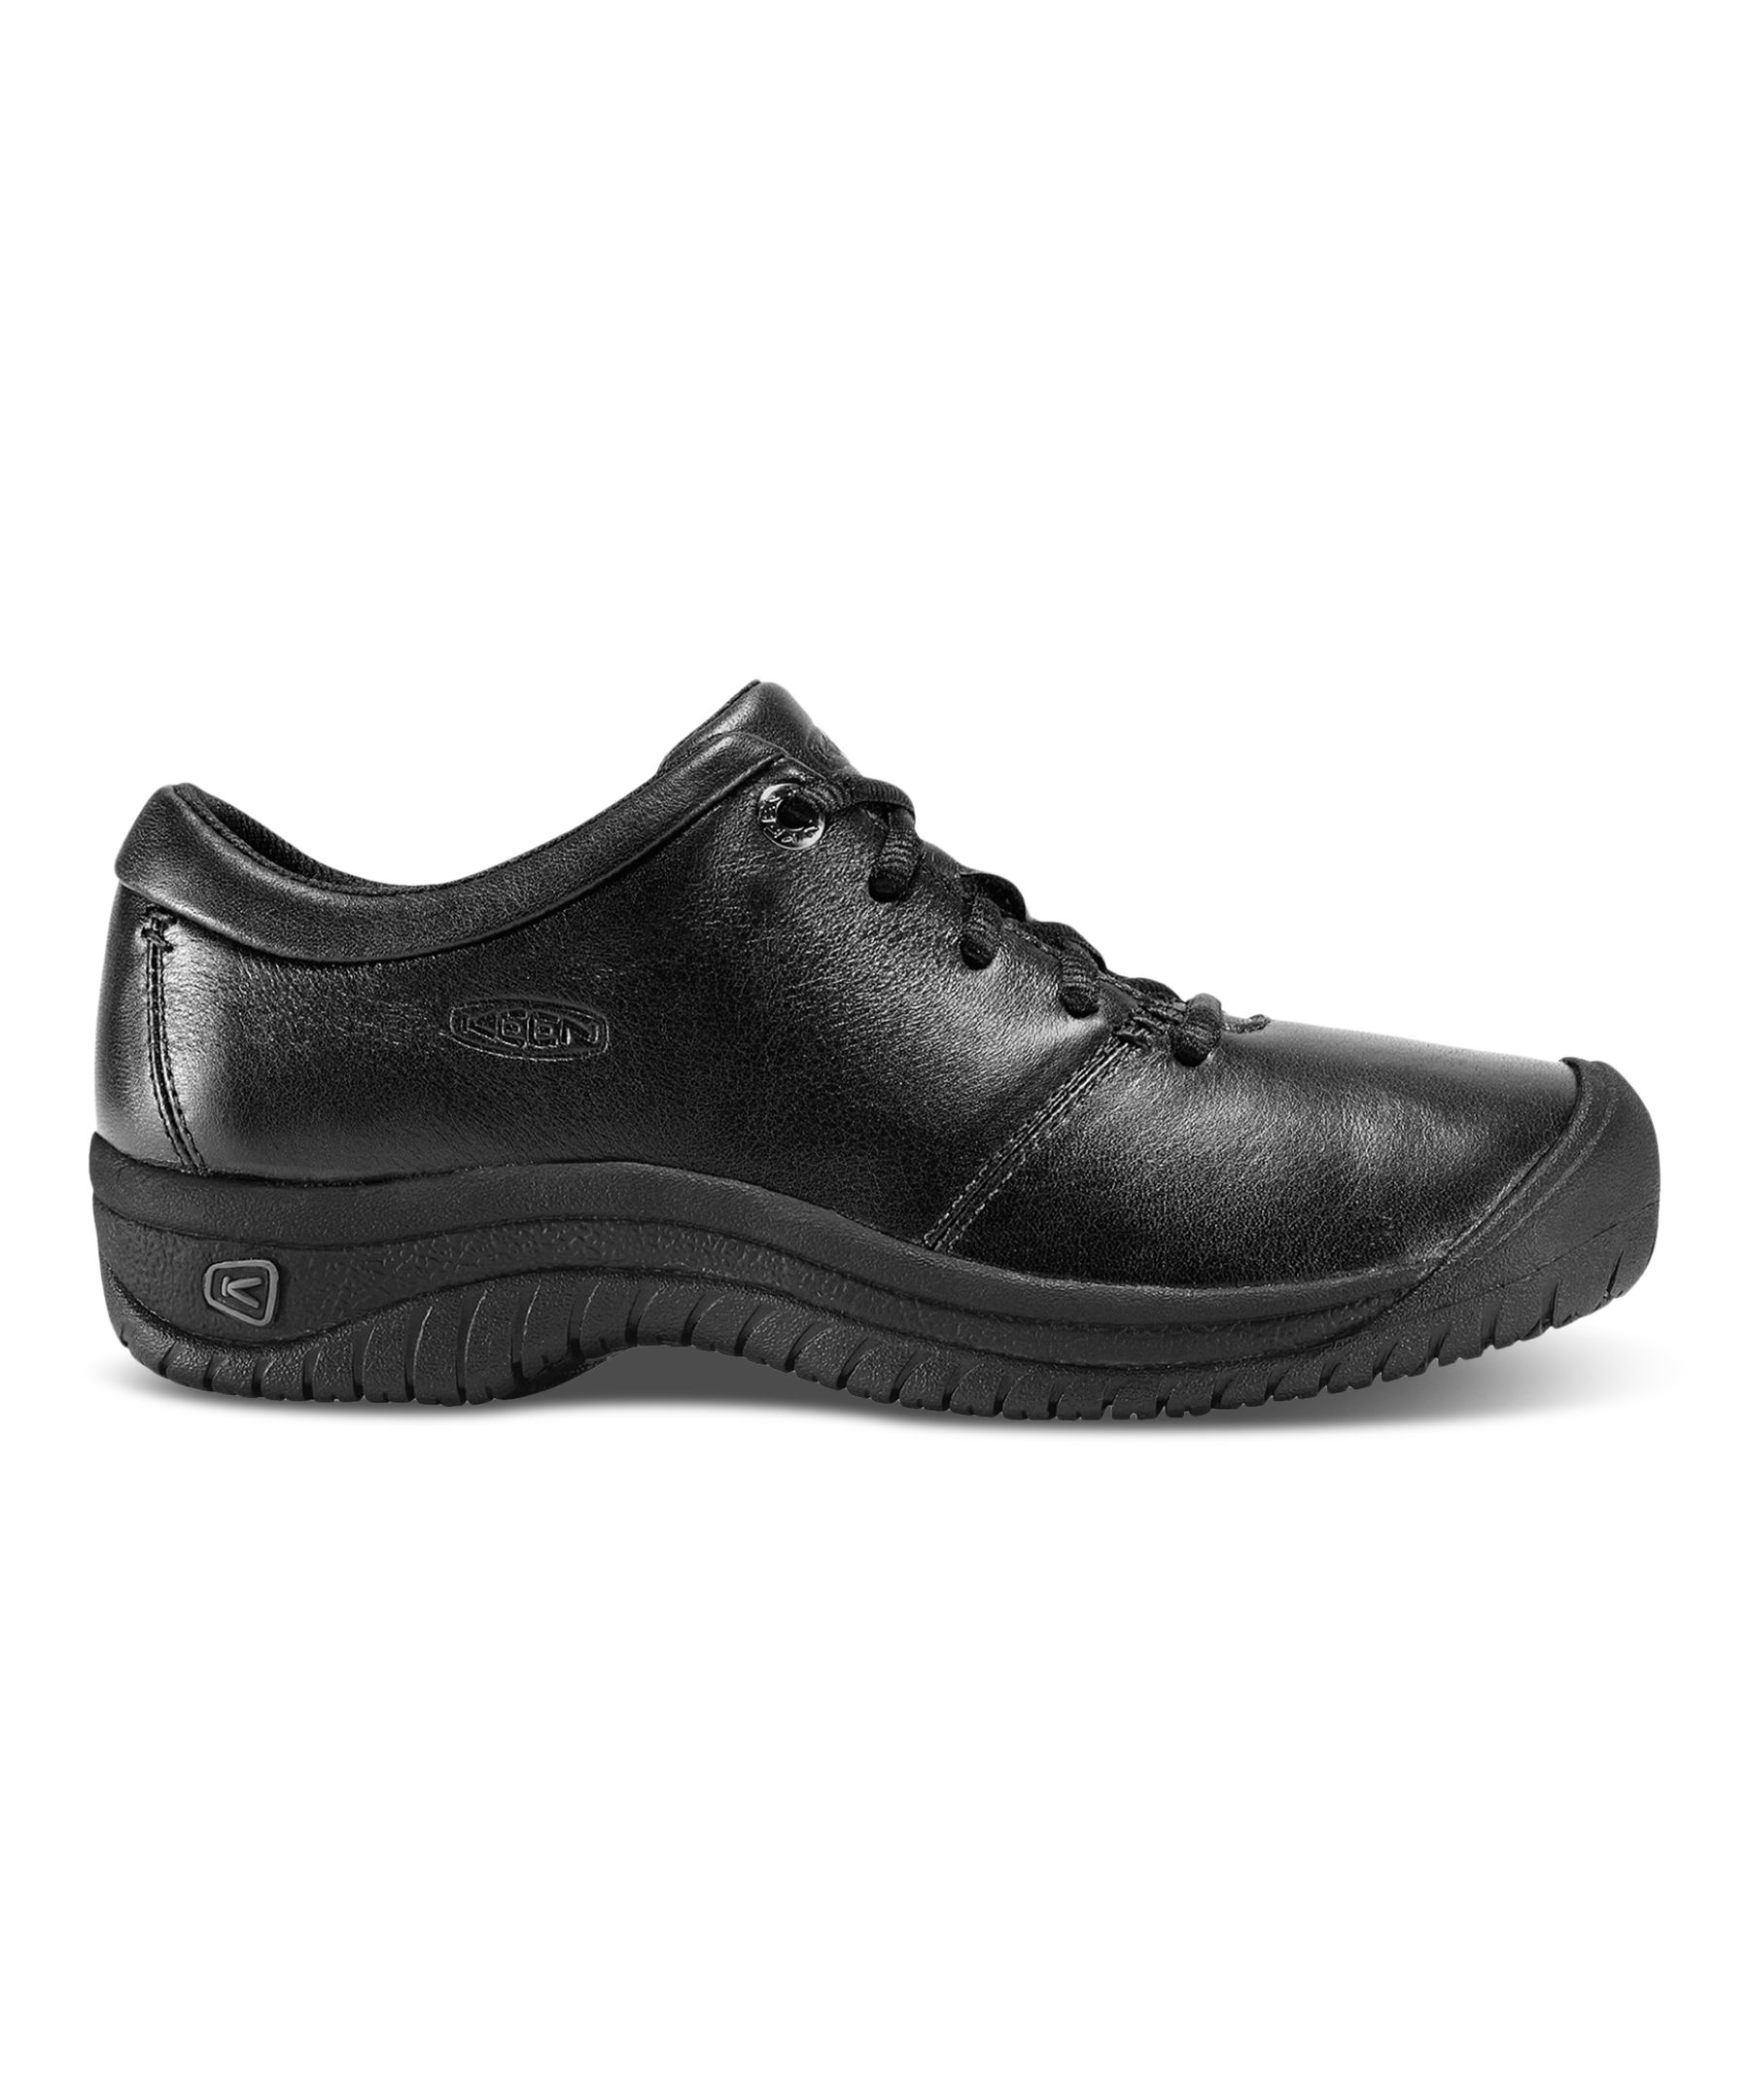 Chaussures de travail-semelle antidérapante KEEN Oxford femme 1006999